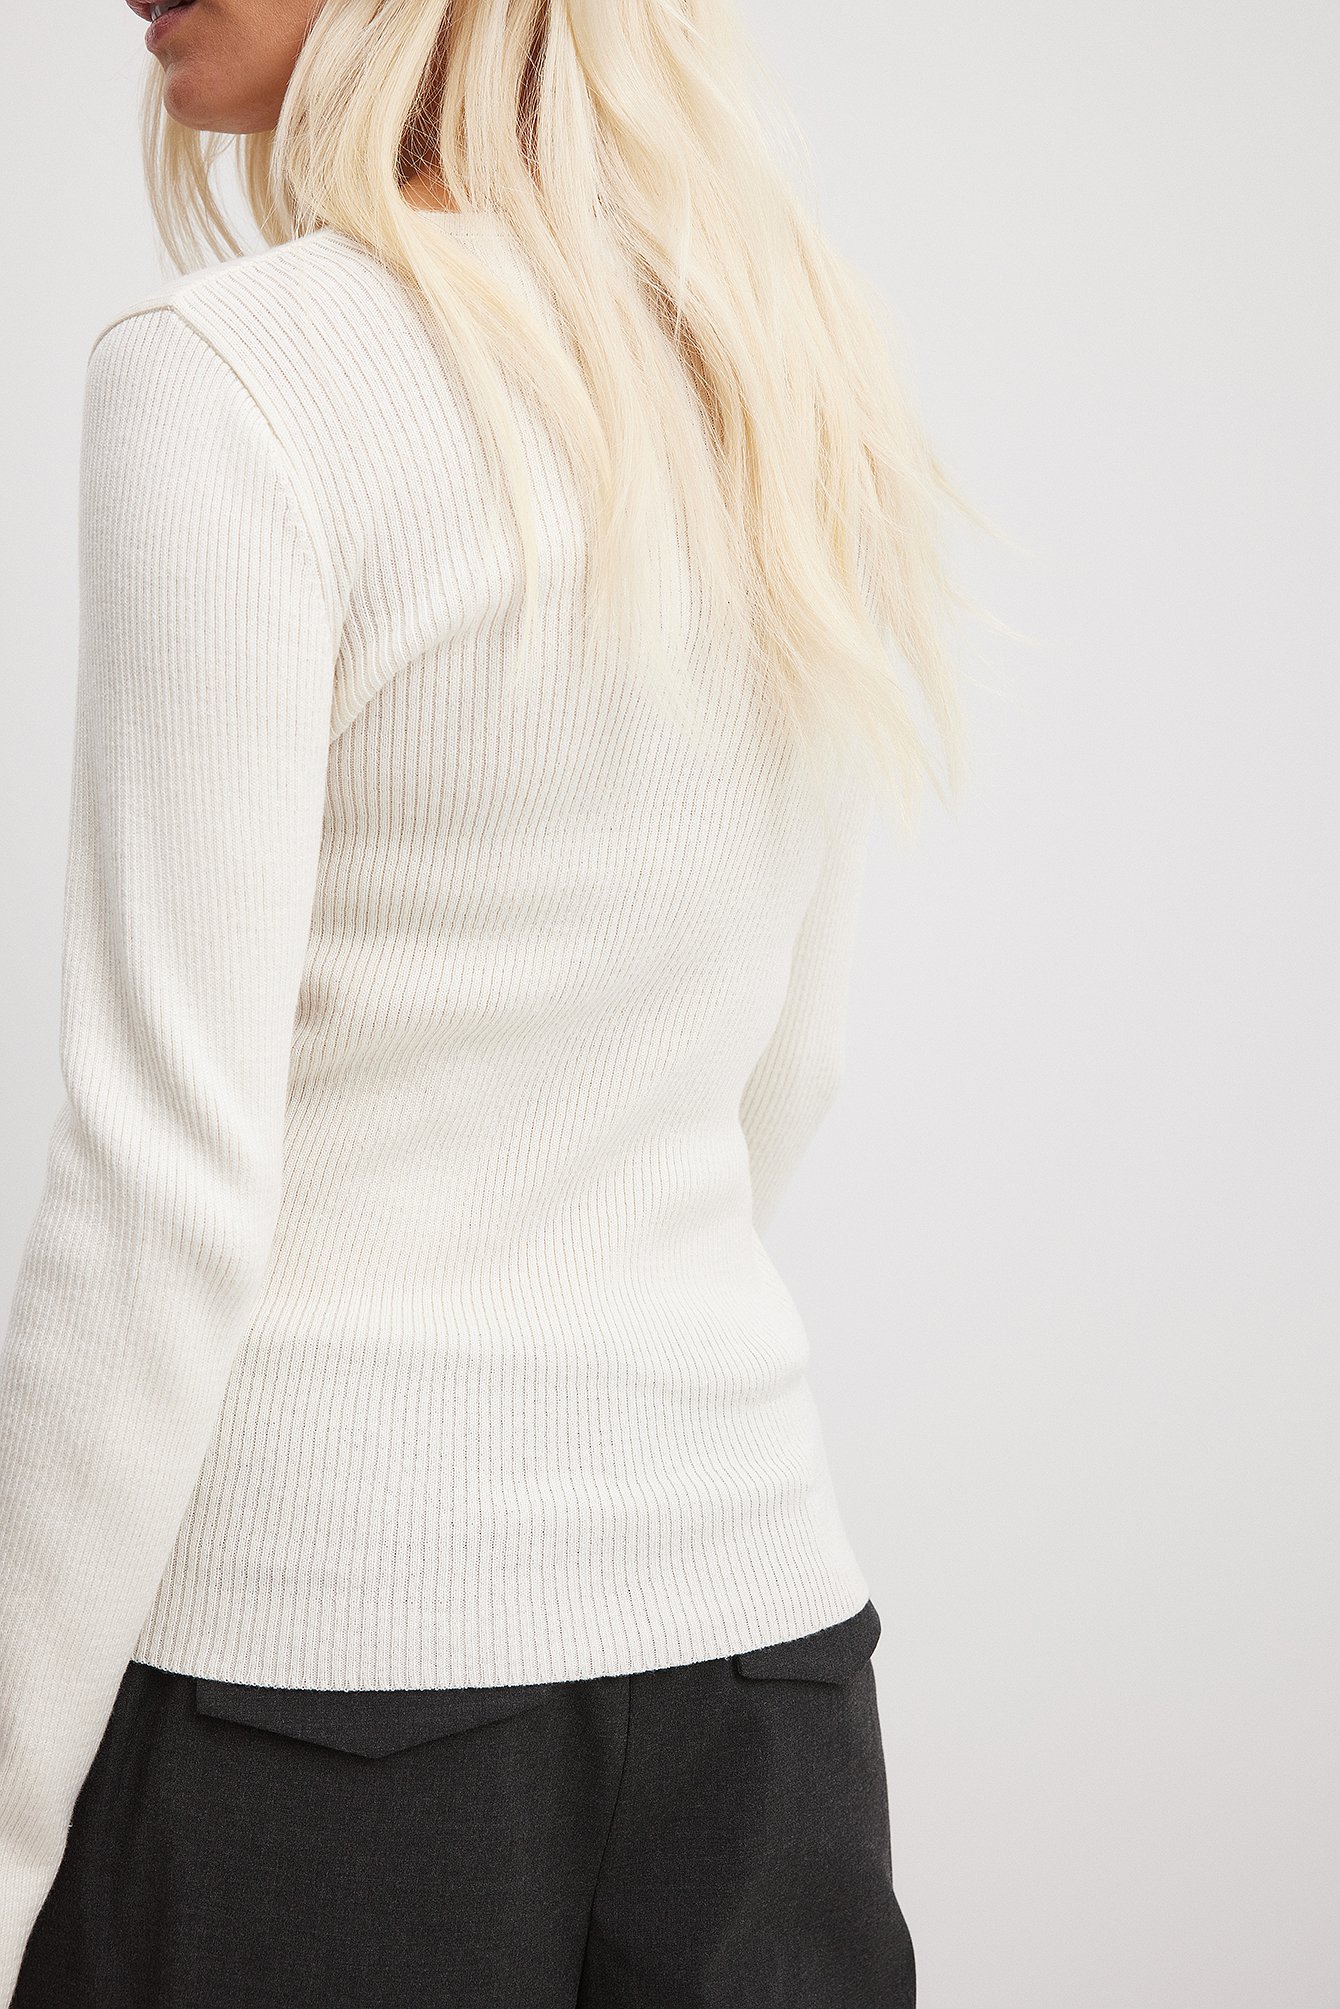 V-detail Light Rib Knitted Sweater Offwhite | NA-KD